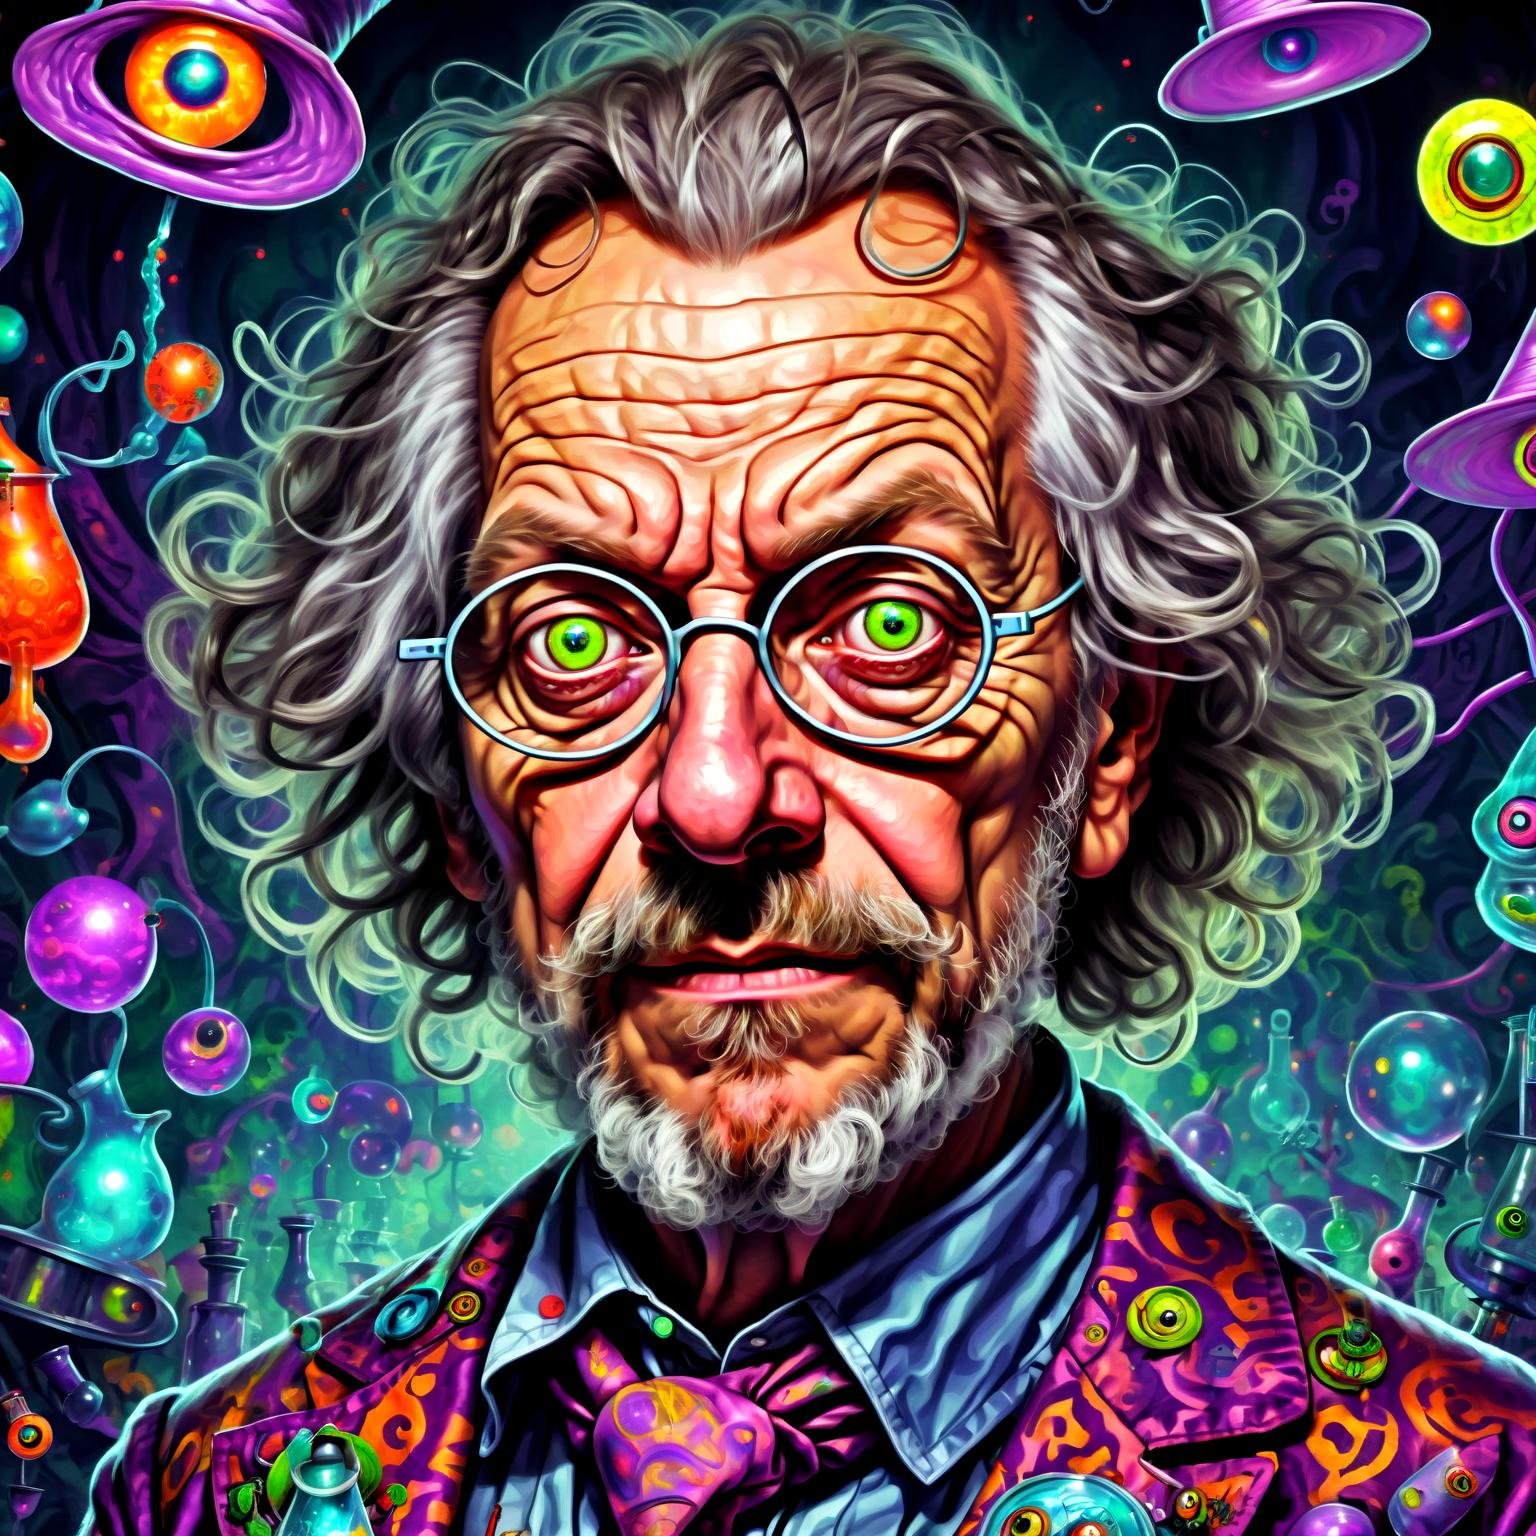 Alexander Shulgin mad professor close up portrait in wonderland, crazy eyes, at a acid test party,in style of(bangerooo:1.15), 2d,